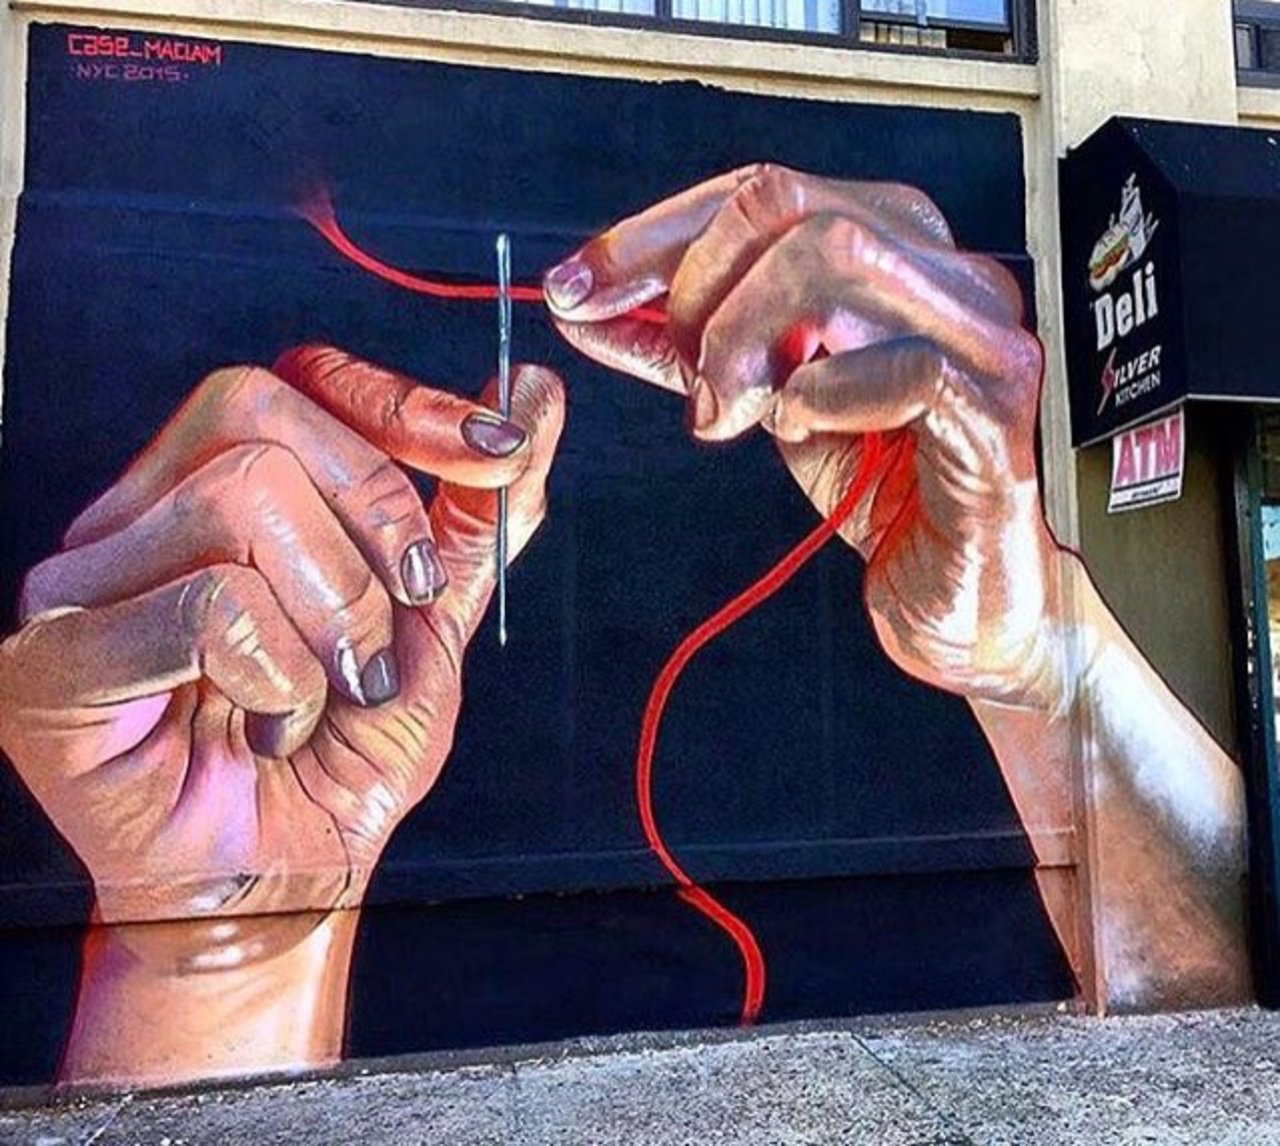 New Street Art by Case Ma'Claim in NYC 

#art #graffiti #mural #streetart https://t.co/vTeoKPxVV2